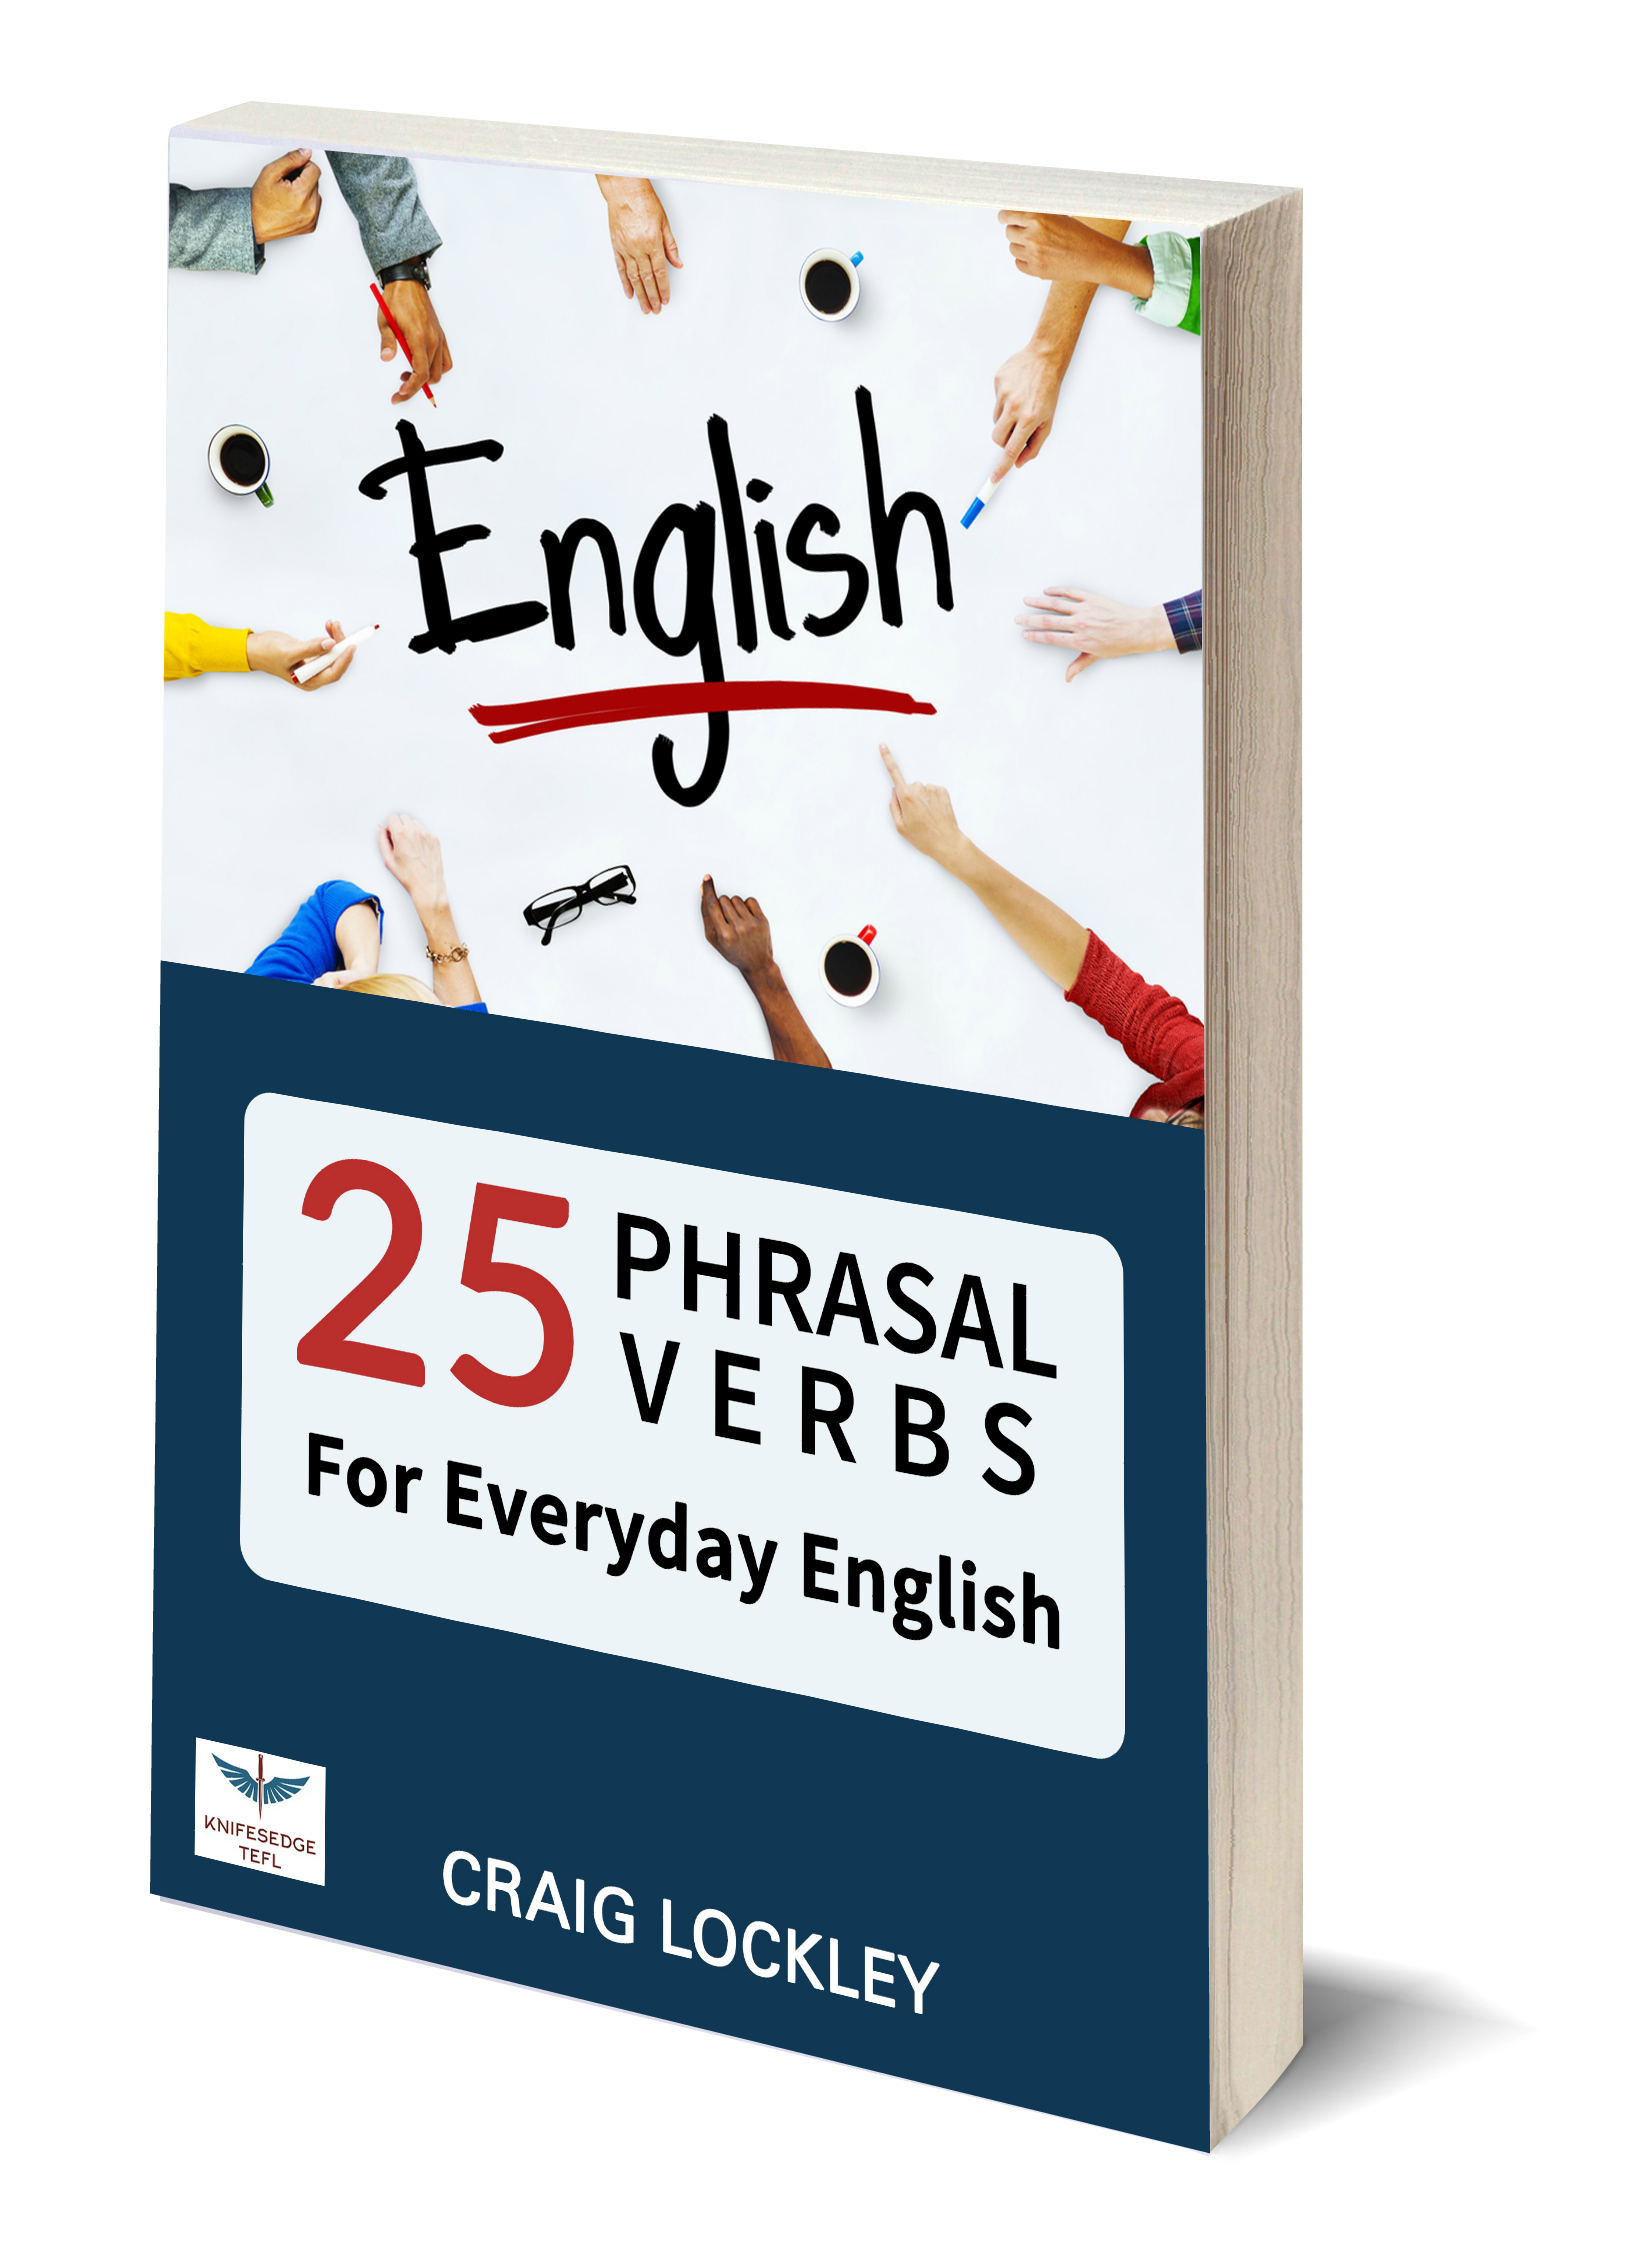 New Ebook – 25 Phrasal Verbs for everyday English